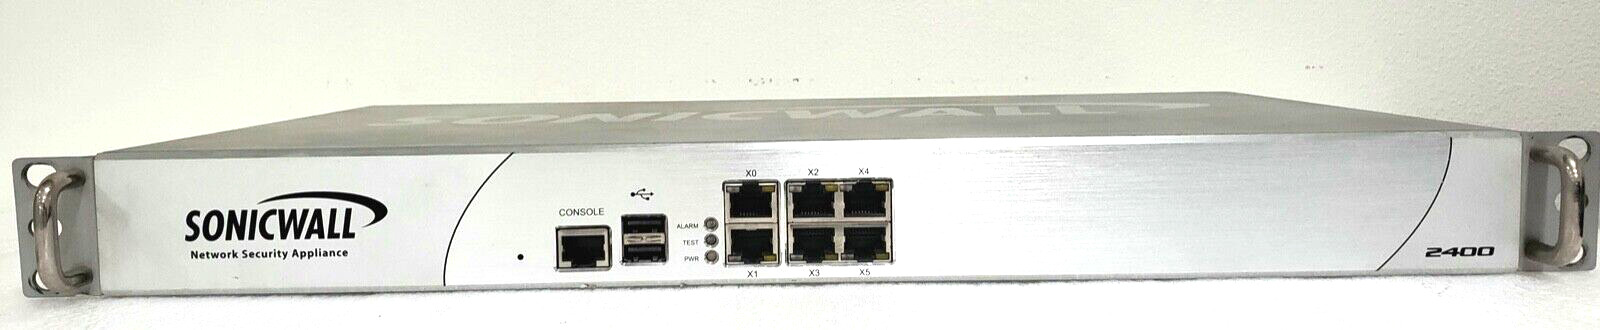 SonicWALL NSA 2400 Network Security Appliance Firewall 1RK25-084